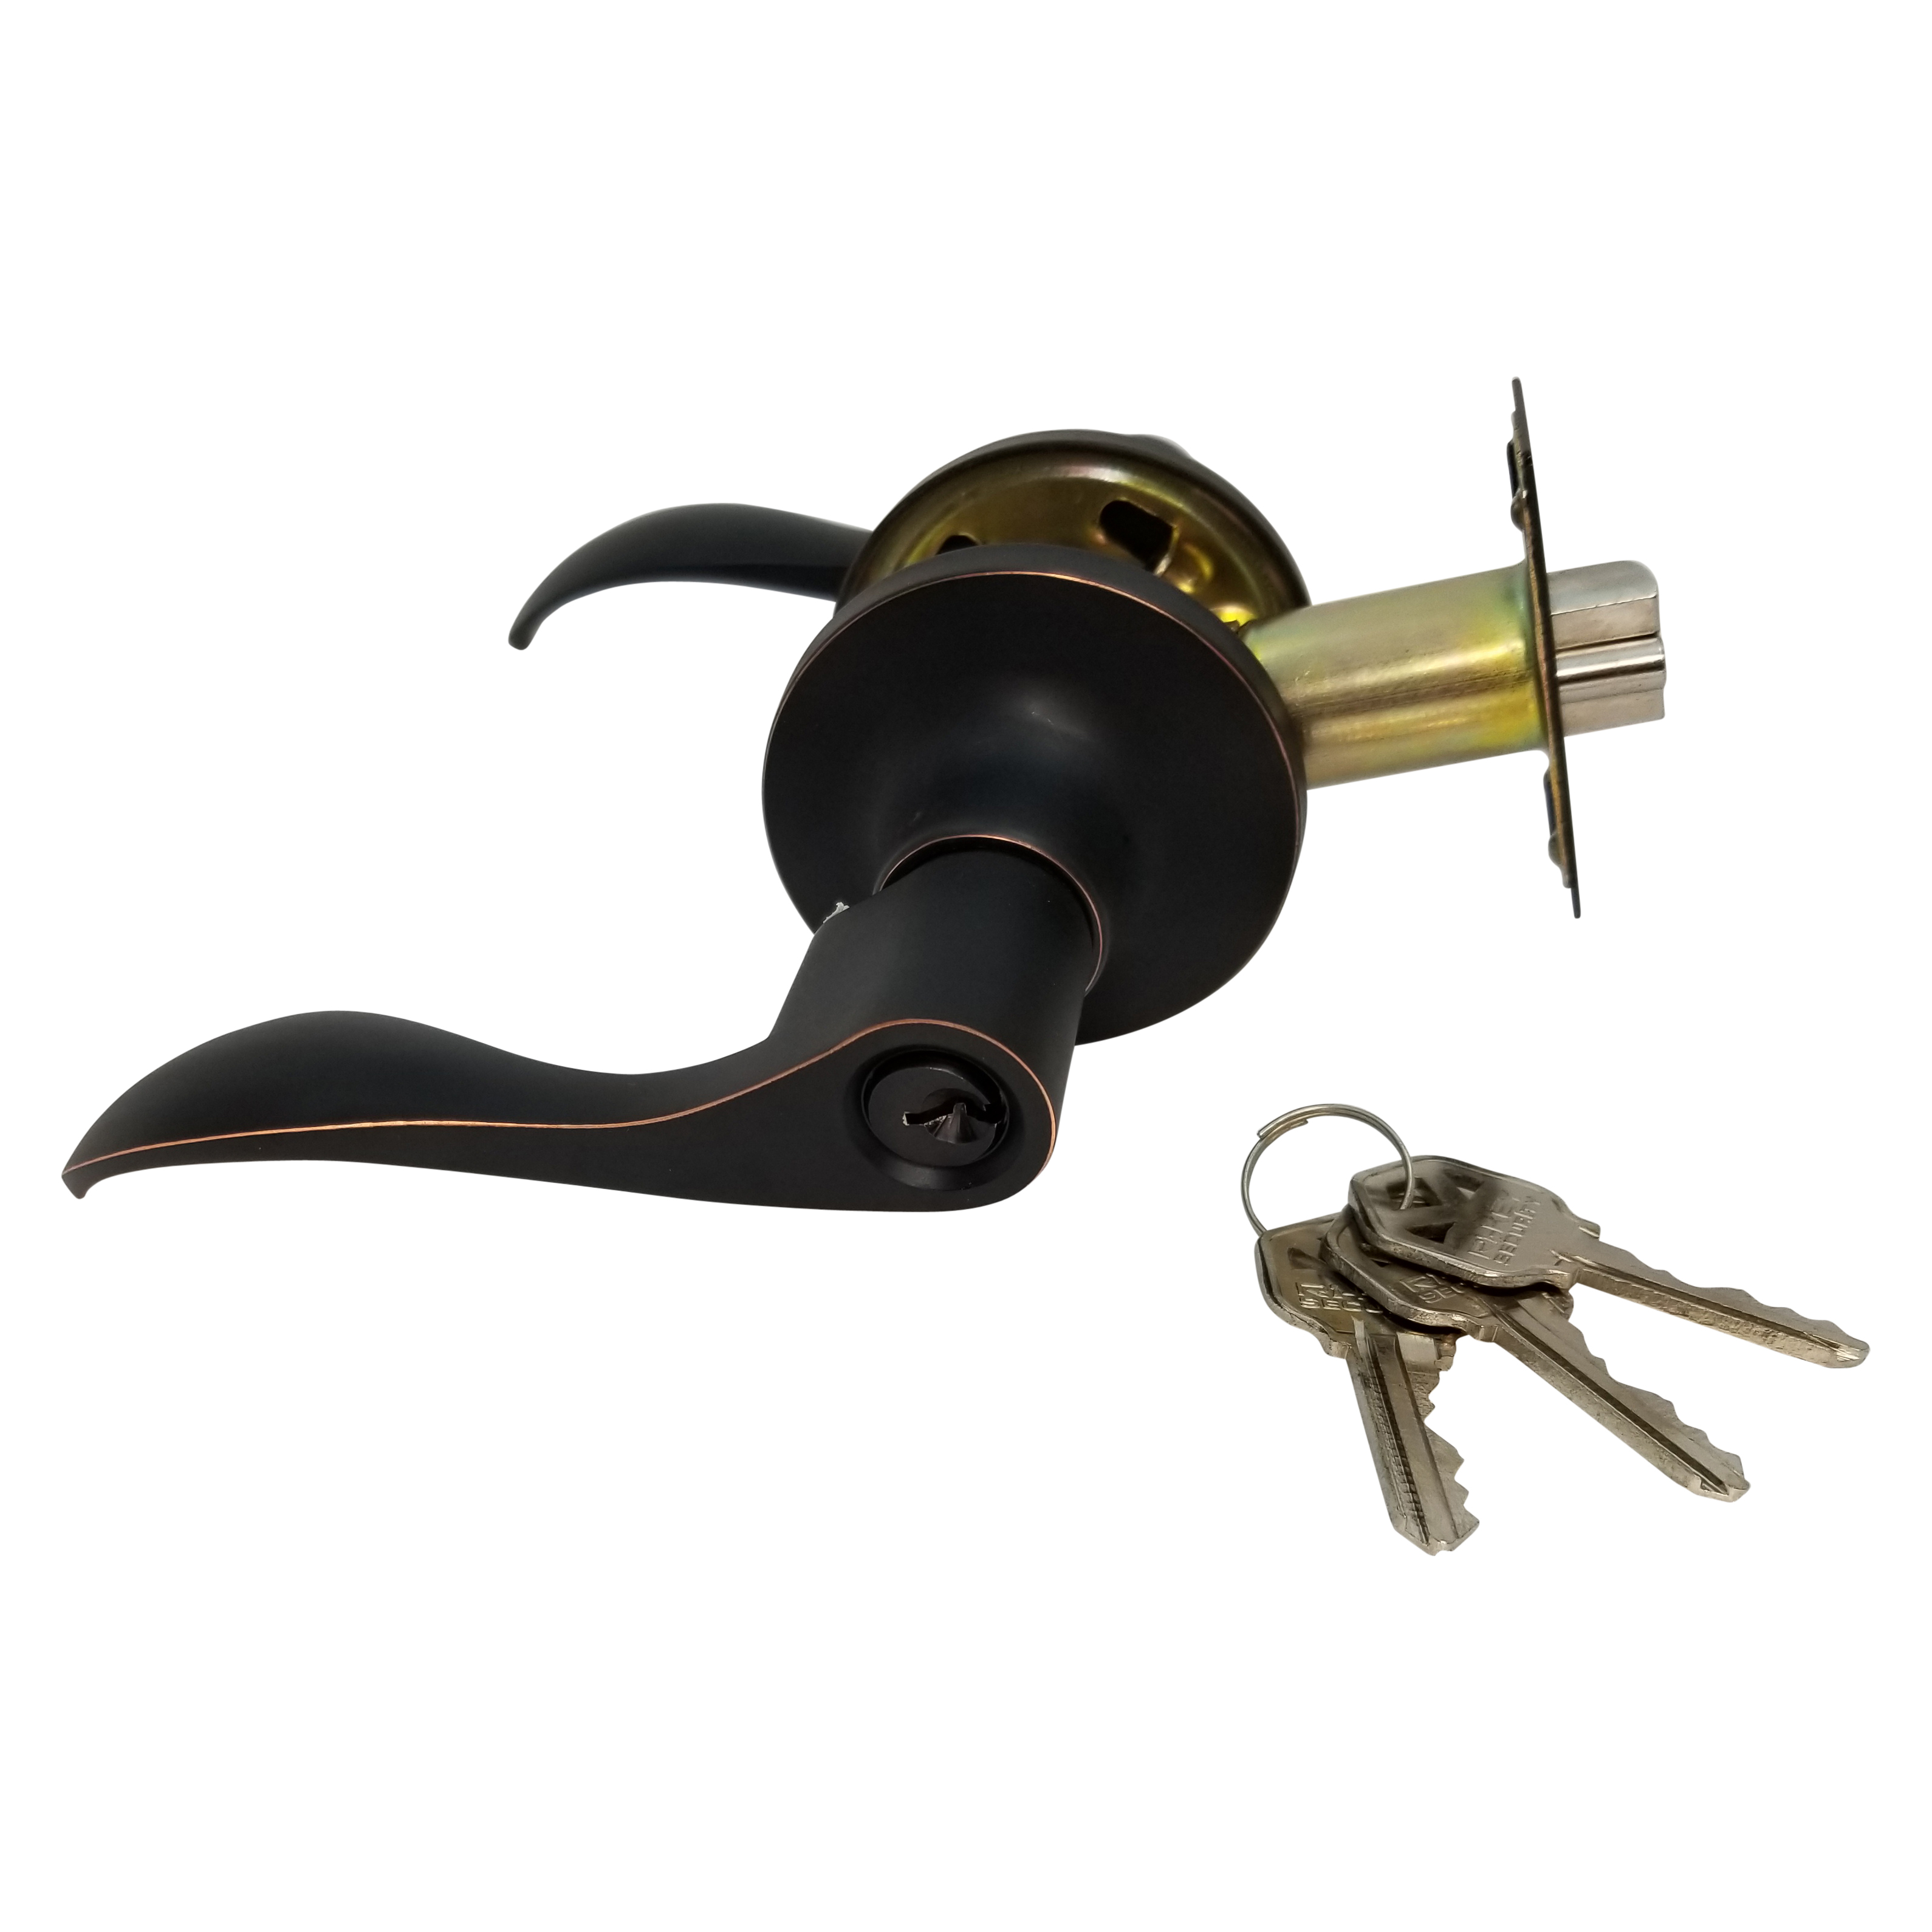 RI-KEY SECURITY Lever Door Lock Entry Keyed Cylinder Wave Handle 3 Keys Oil-Rub Bronze Finish KW LH - image 1 of 11